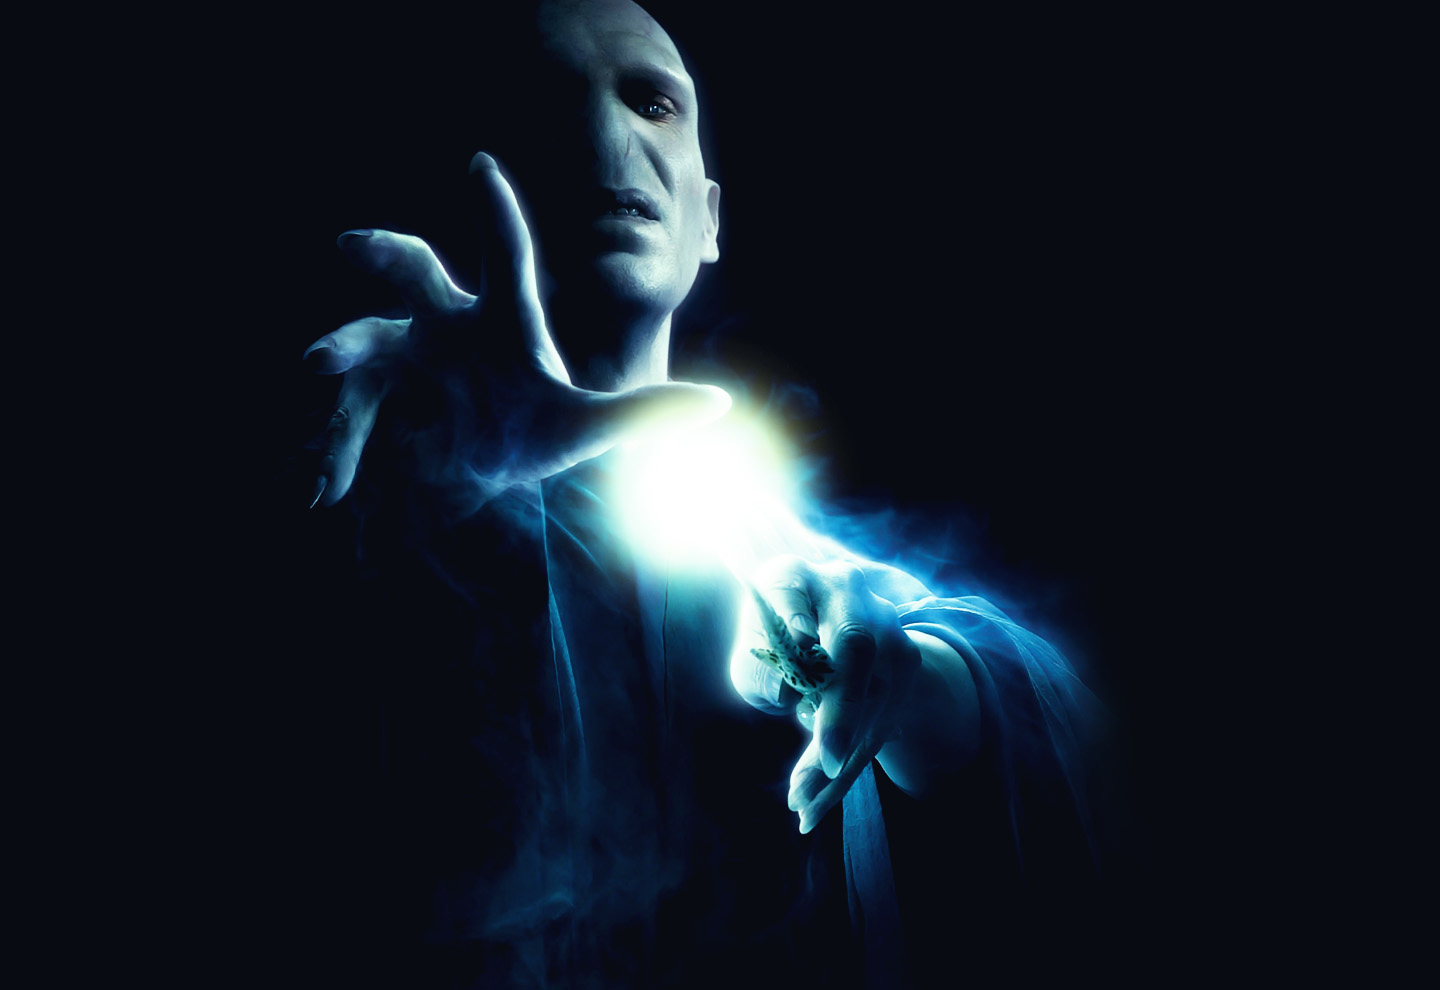 Lord Voldemort Wallpaper By Maxoooow